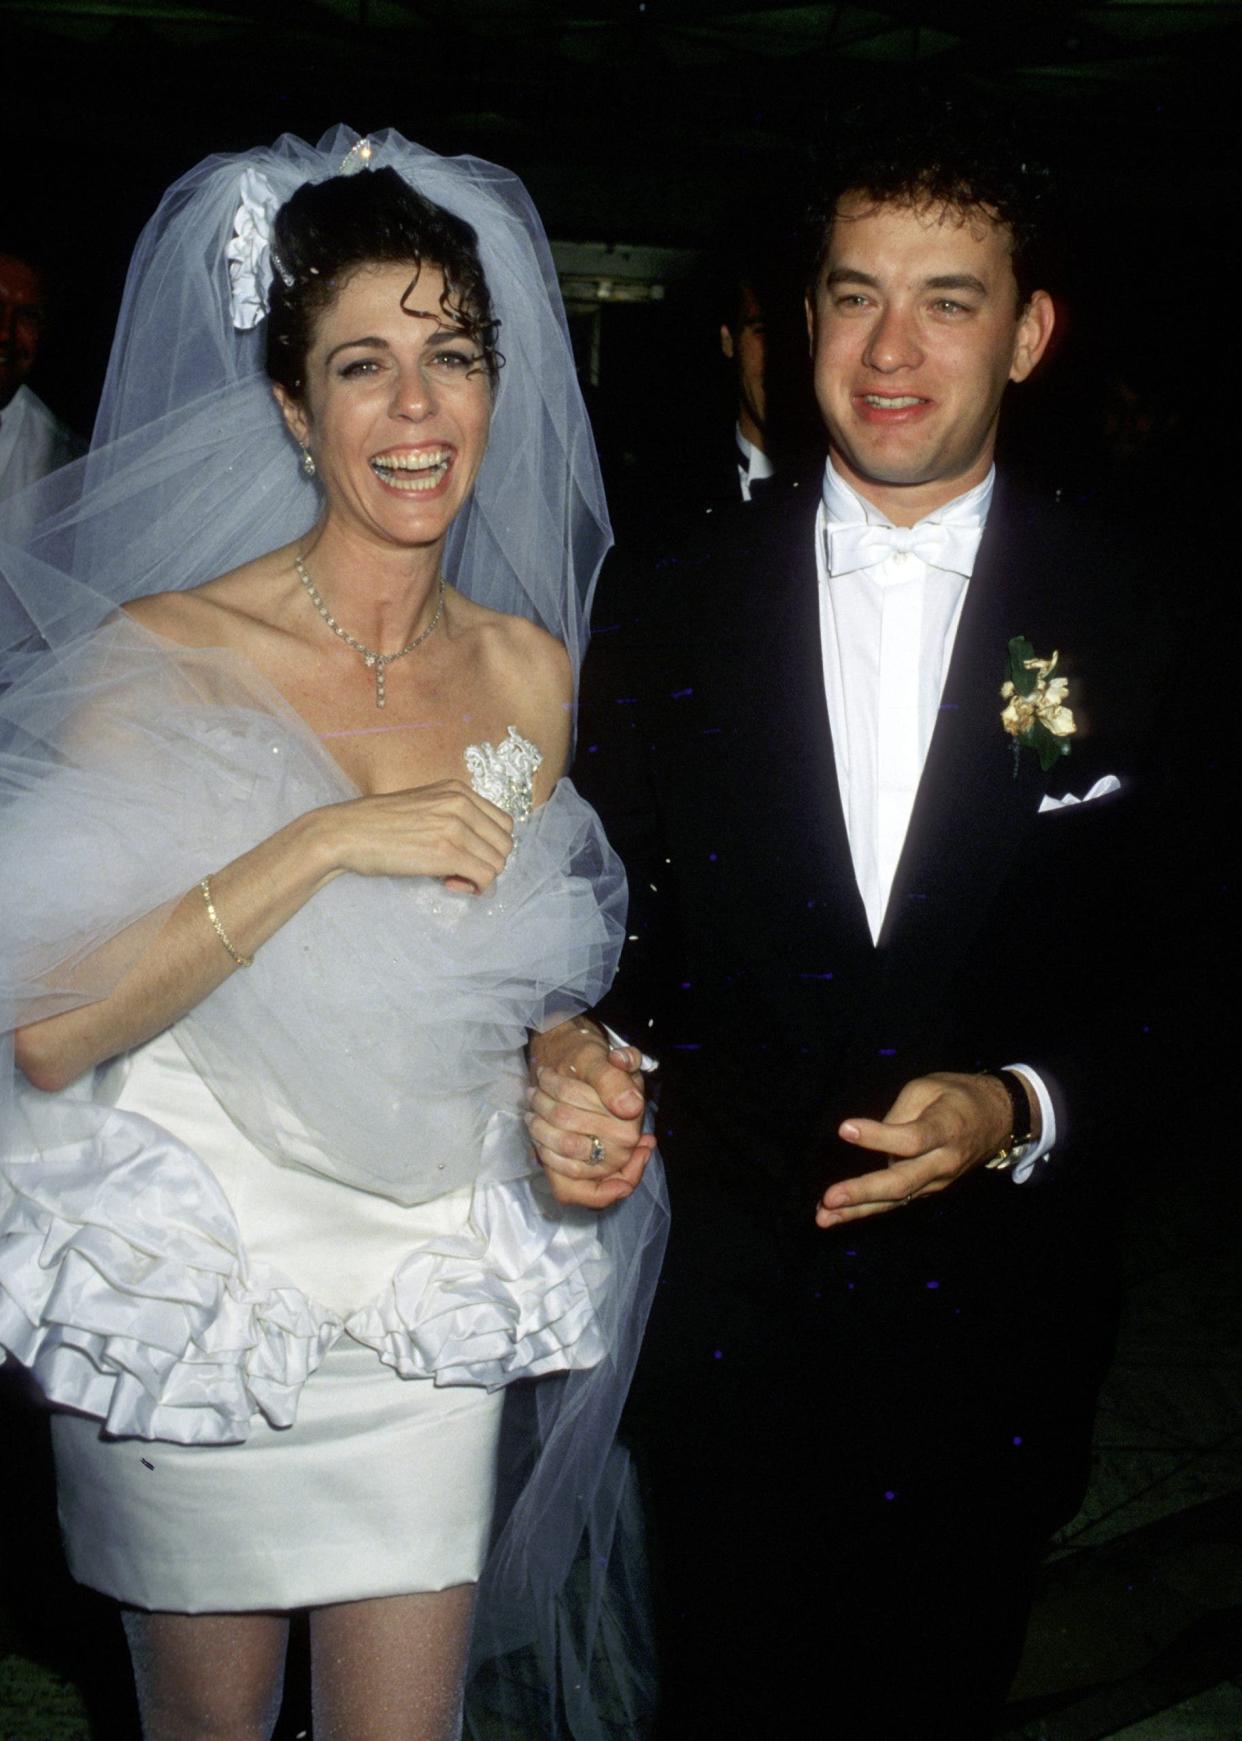 Tom Hanks and Rita Wilson at their wedding